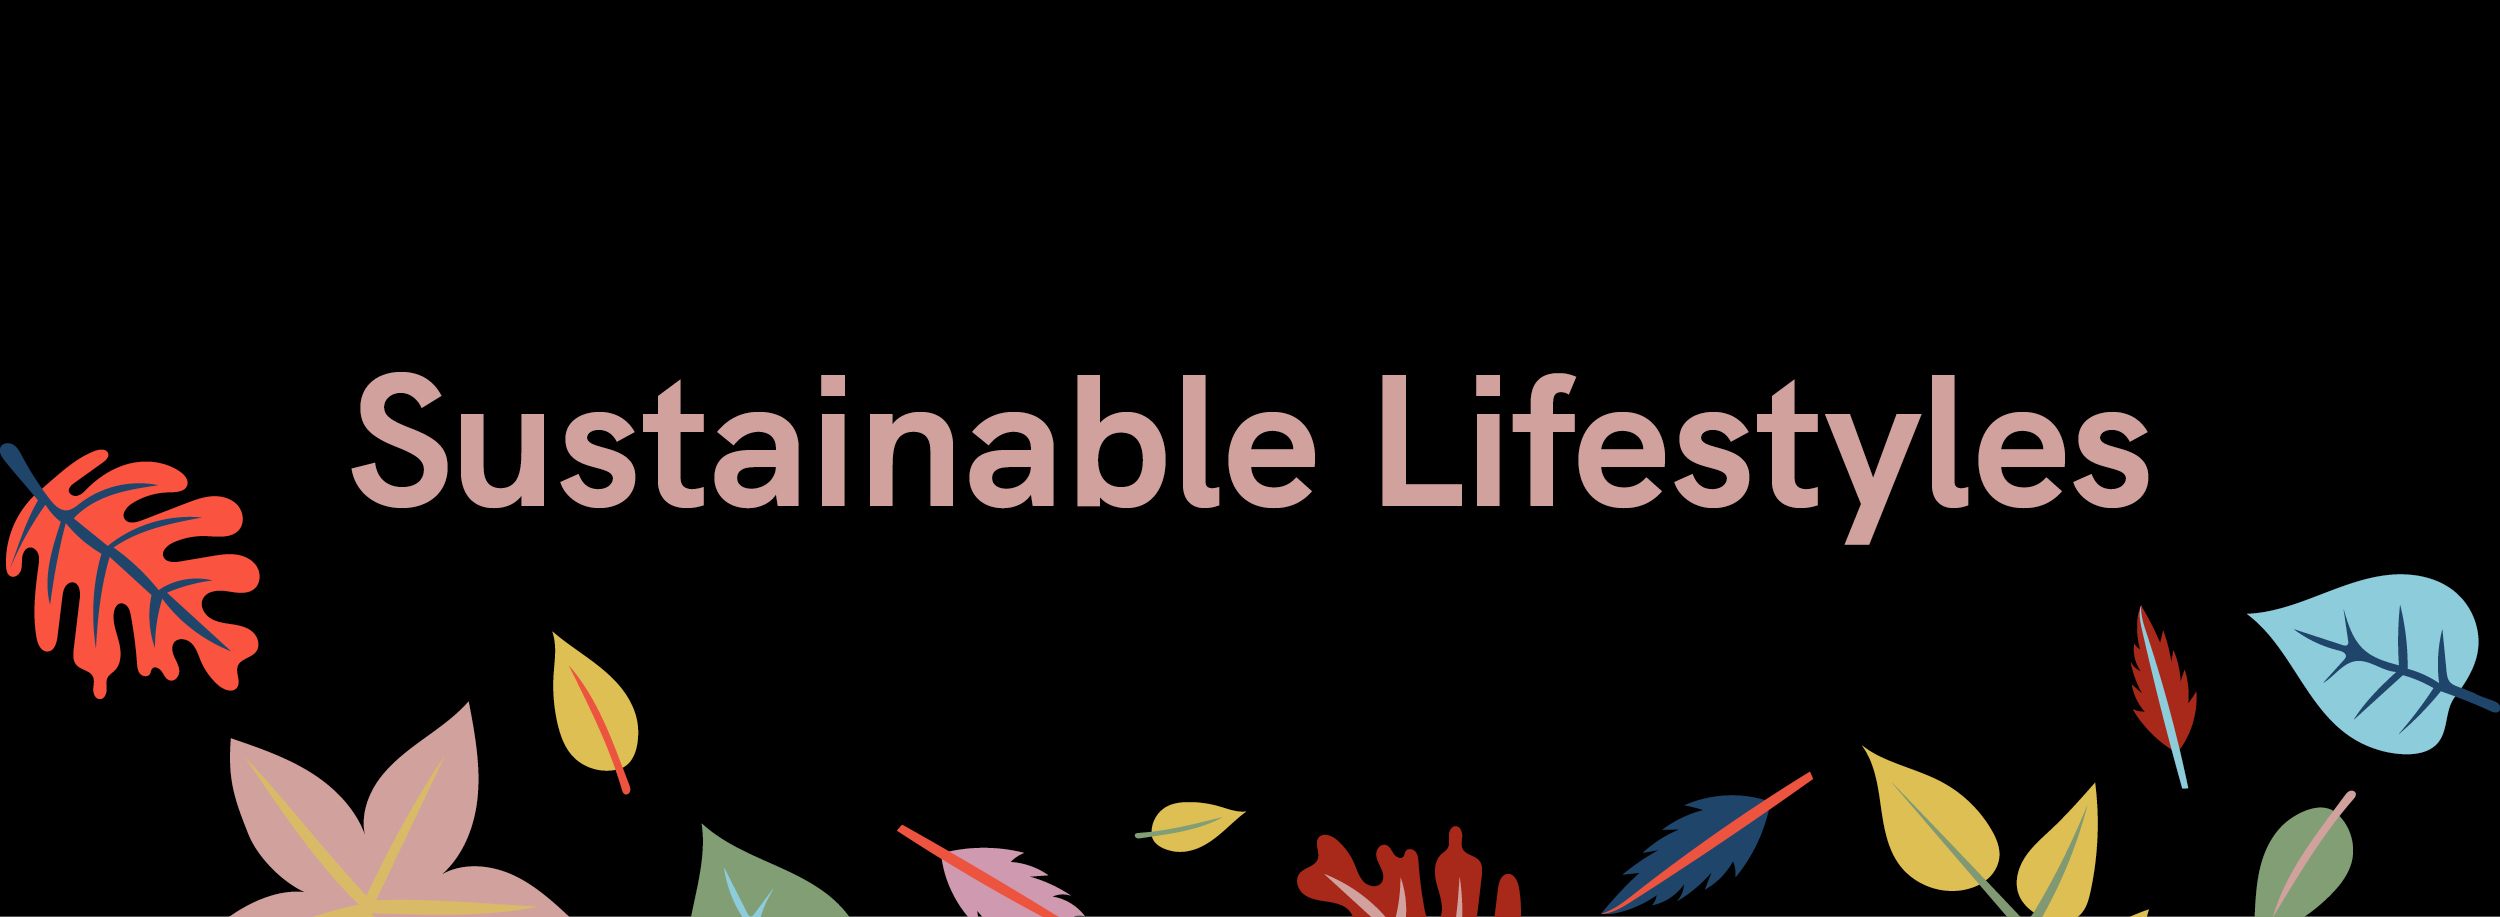 Sustainable lifestyles